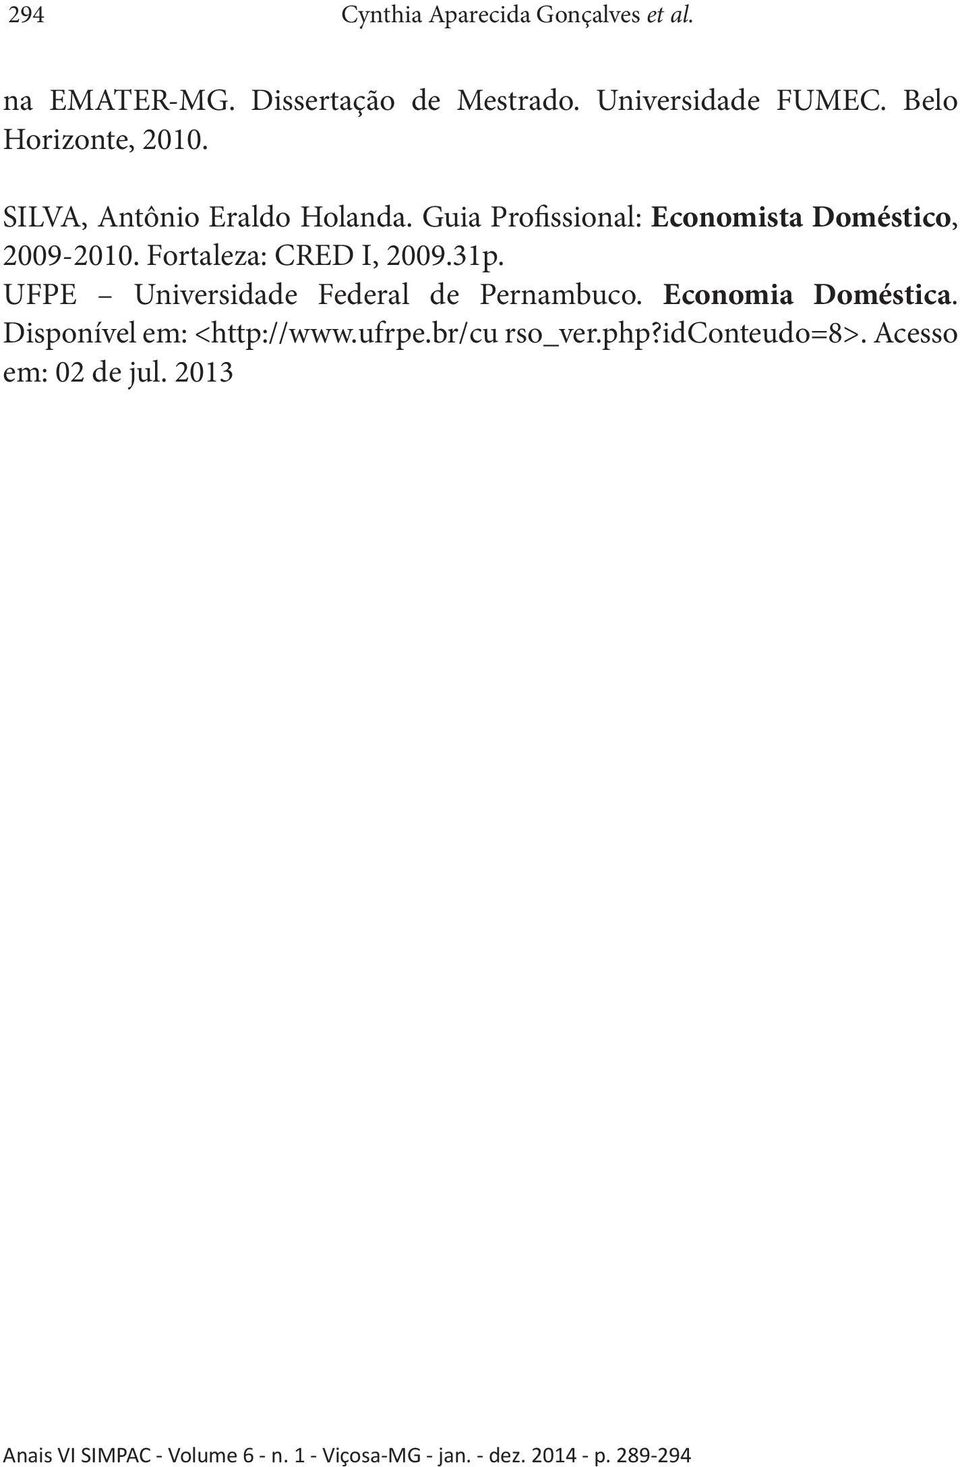 Guia Profissional: Economista Doméstico, 2009-2010. Fortaleza: CRED I, 2009.31p.